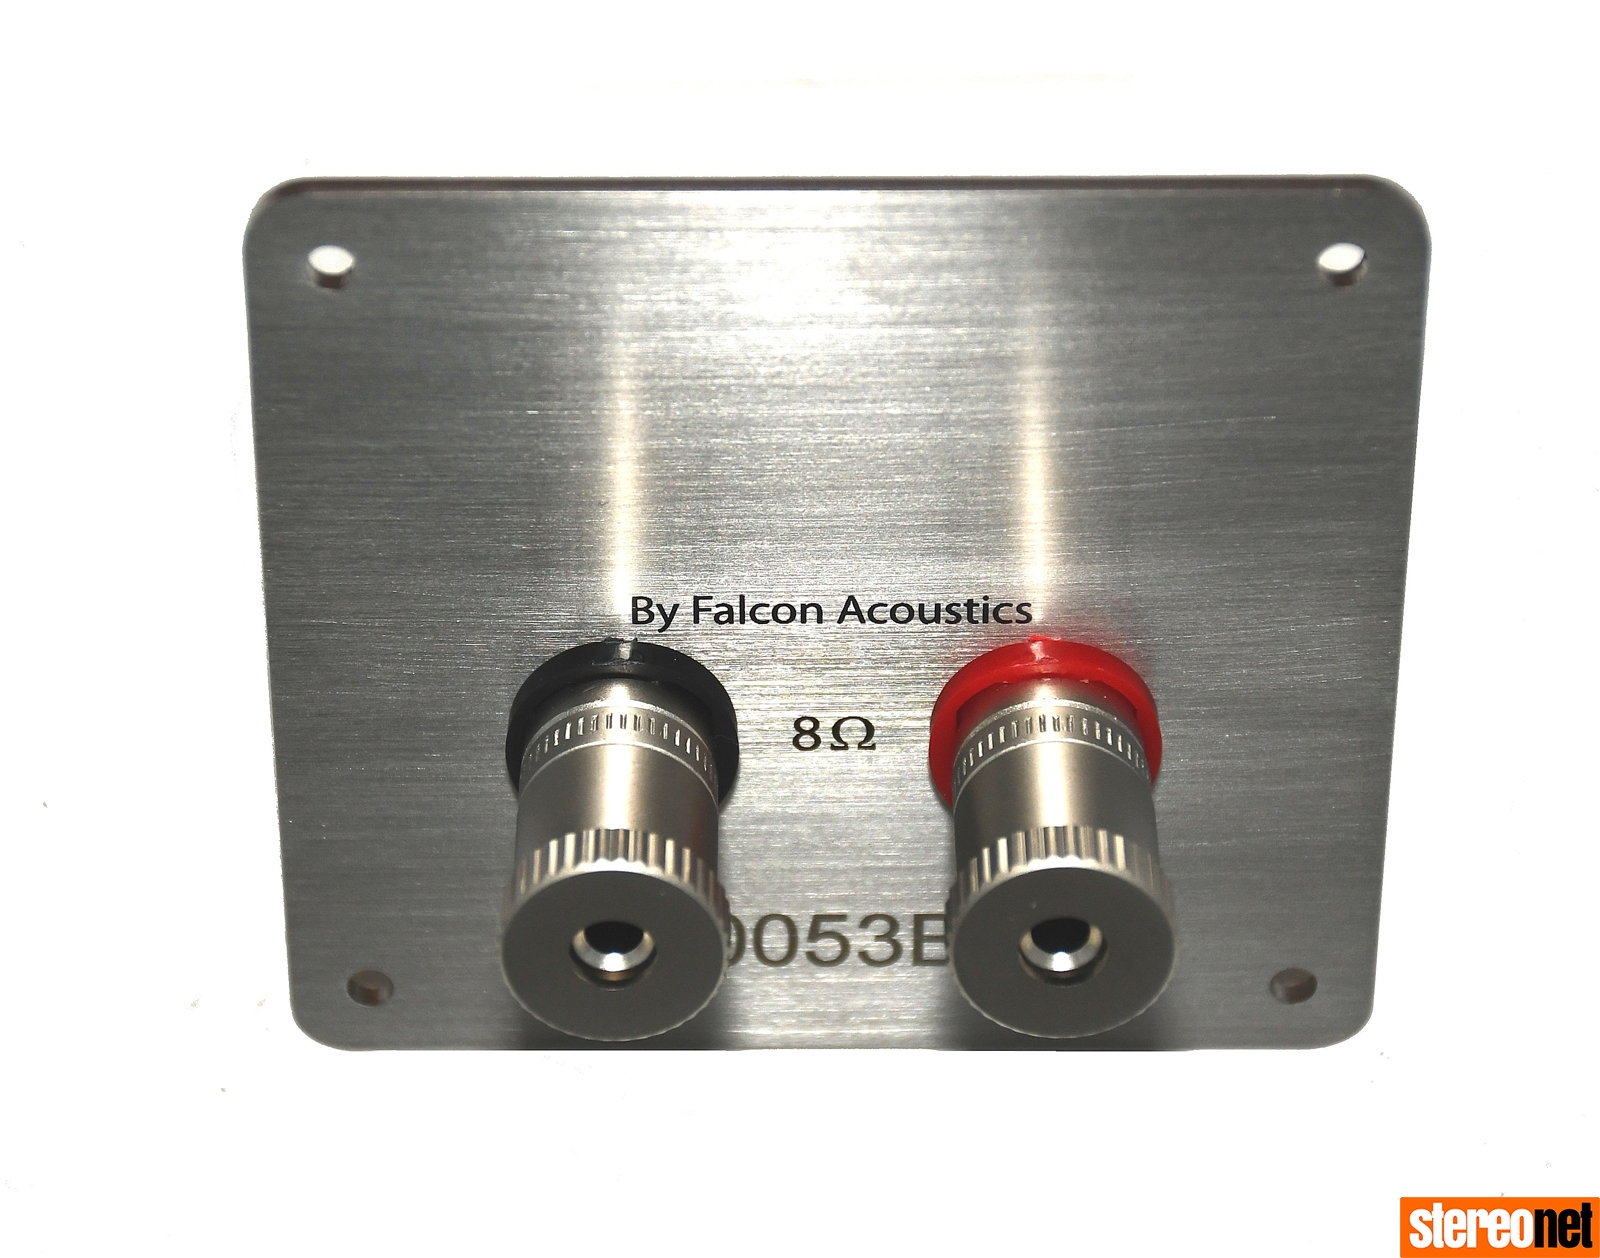 Falcon Acoustics IMF100 Kit Review